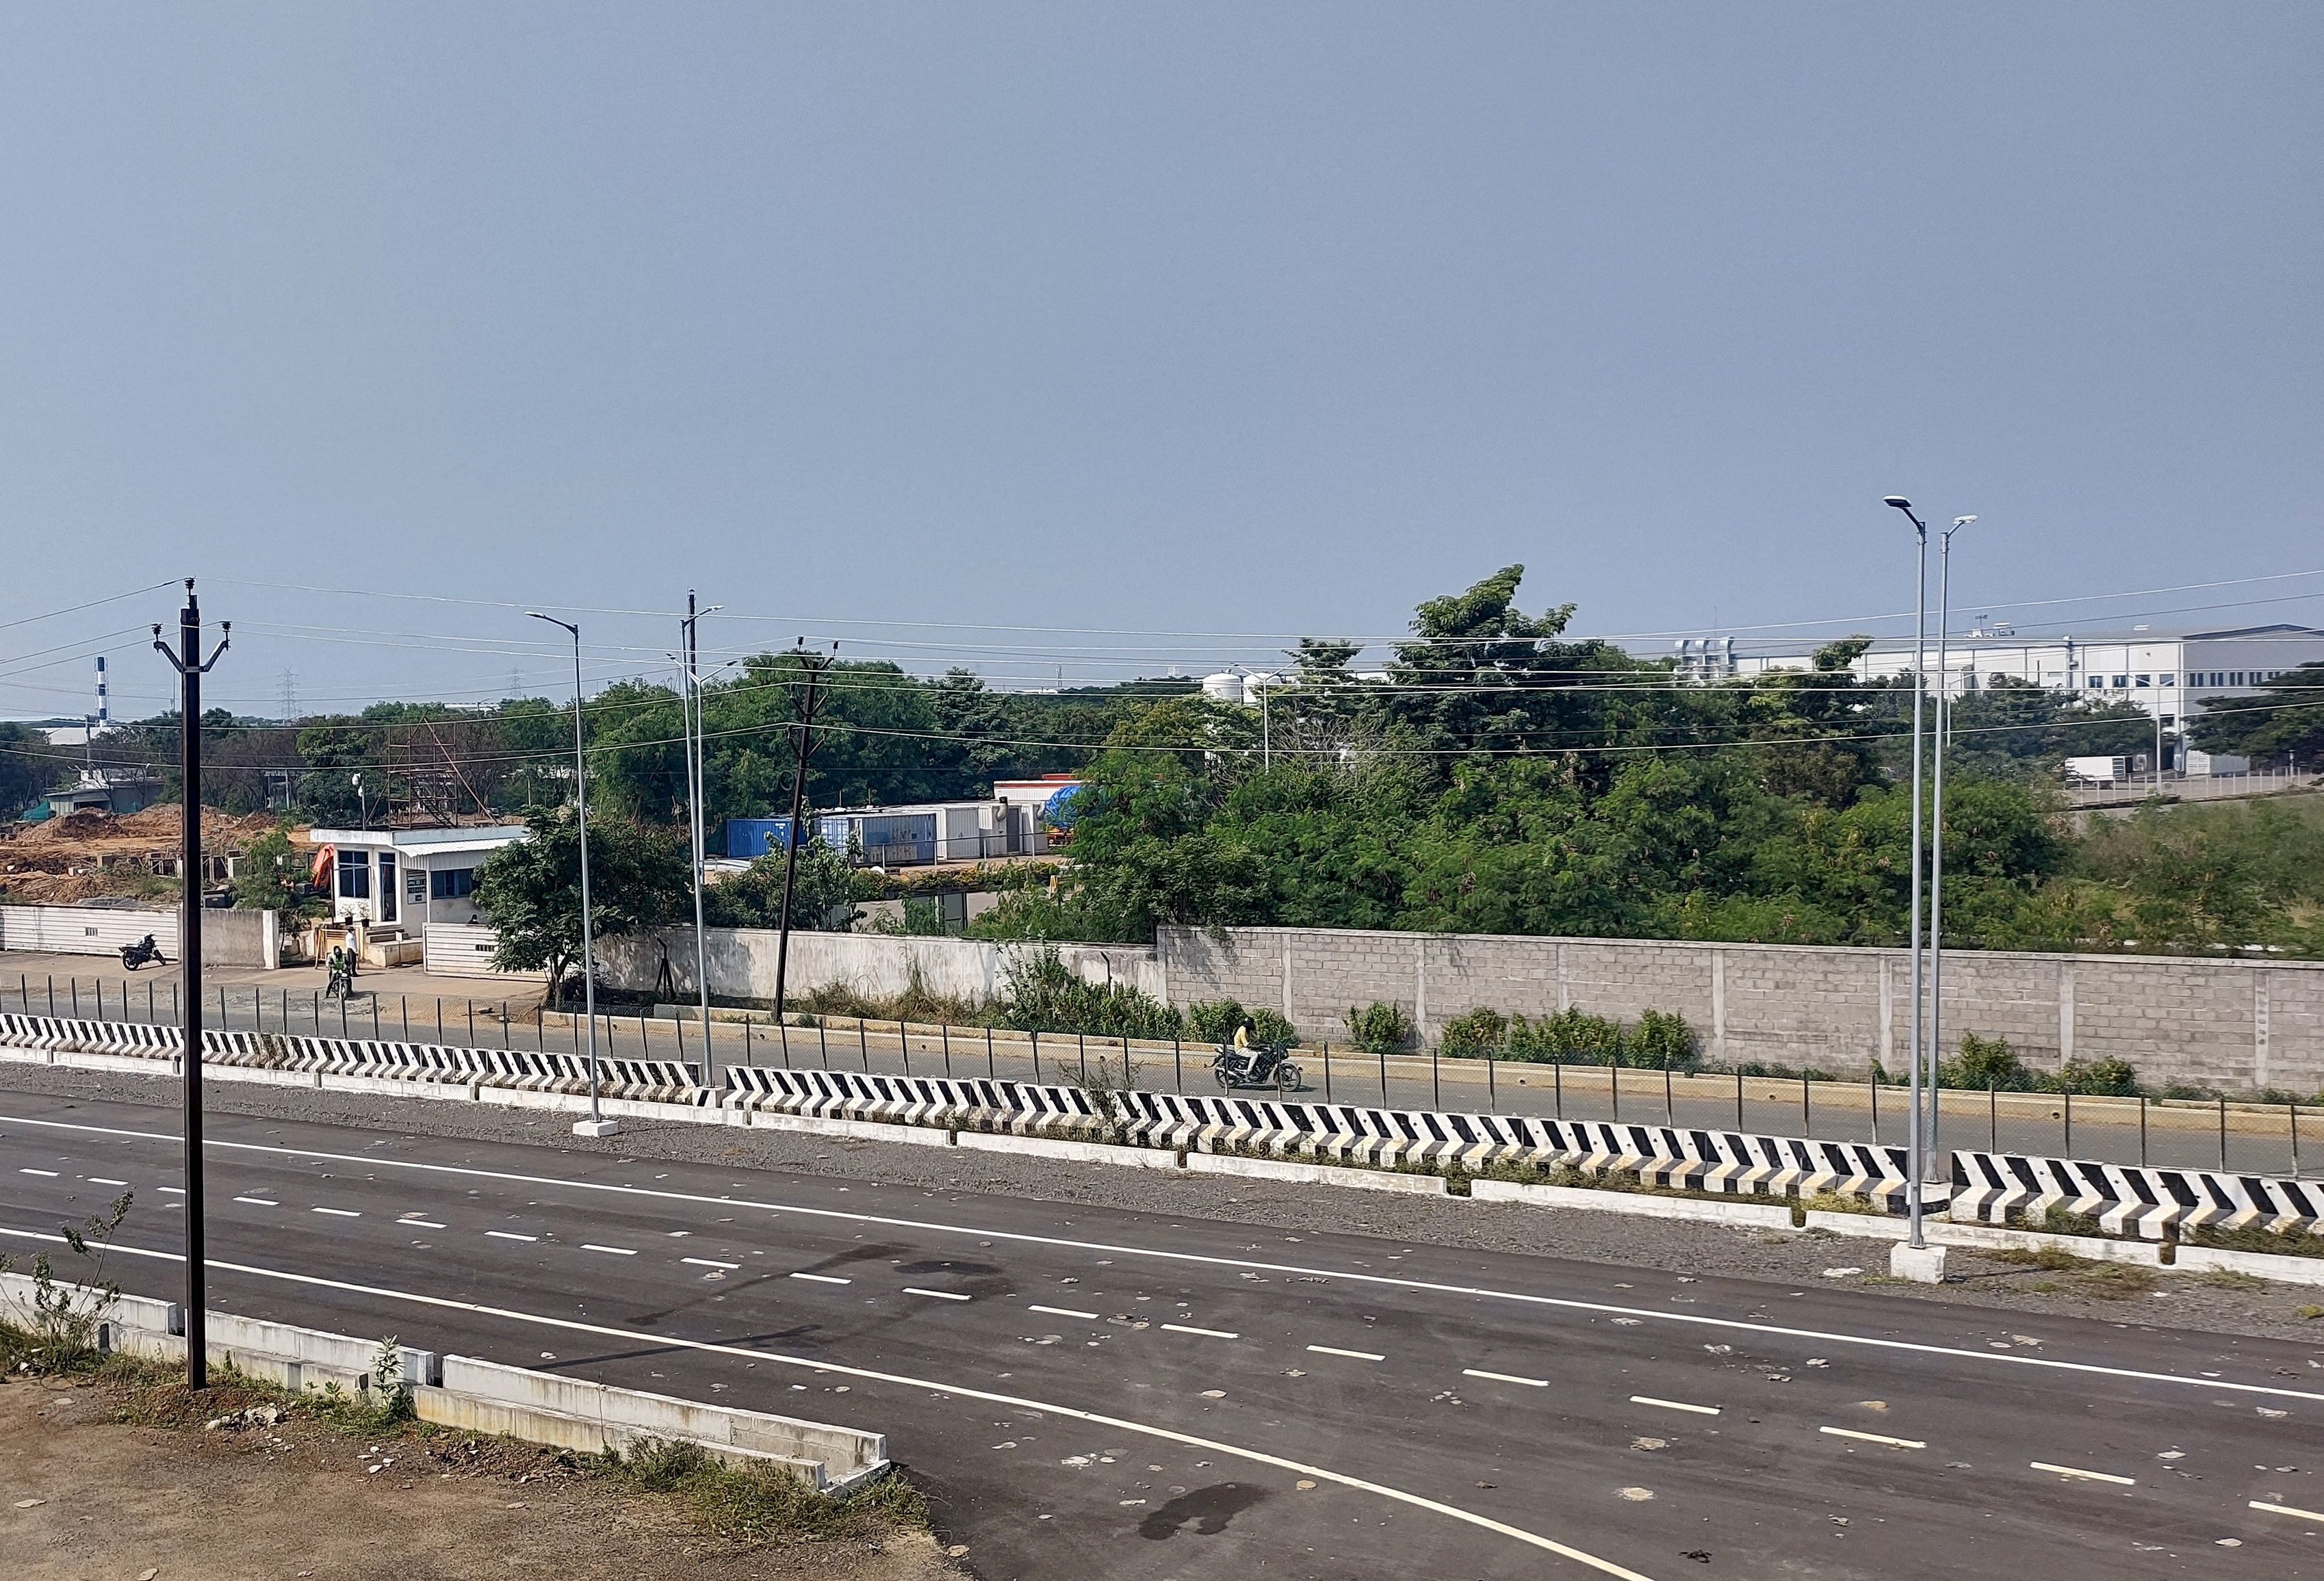 Men ride their motorbikes past a closed plant of India Foxconn unit, near Chennai